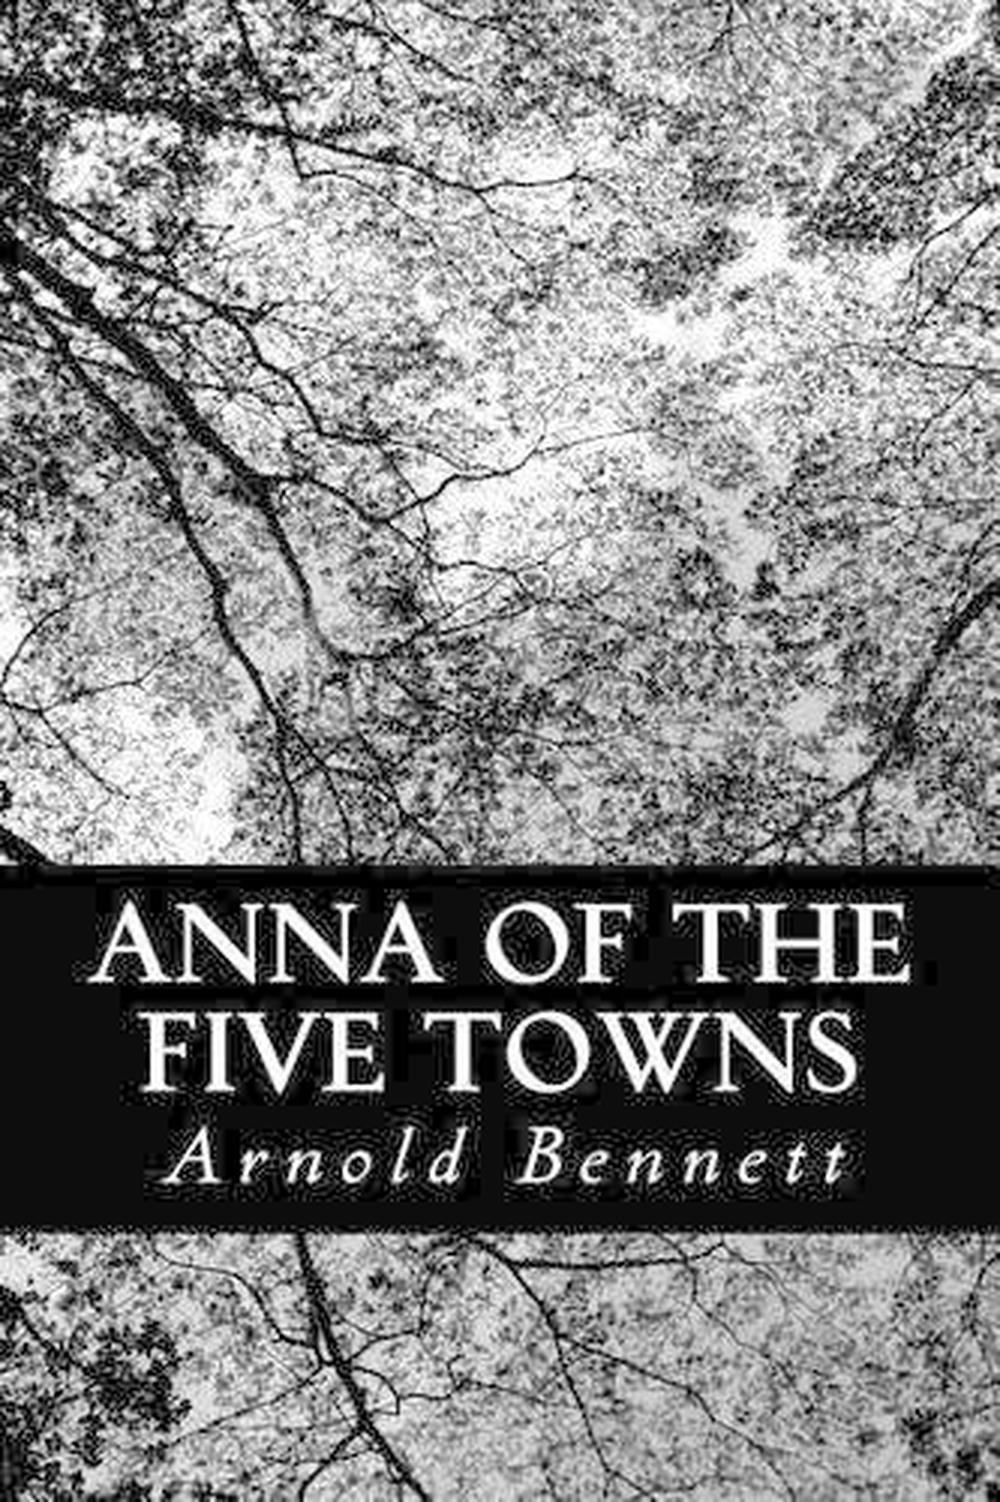 82 List Arnold Bennett Books Five Towns for Learn